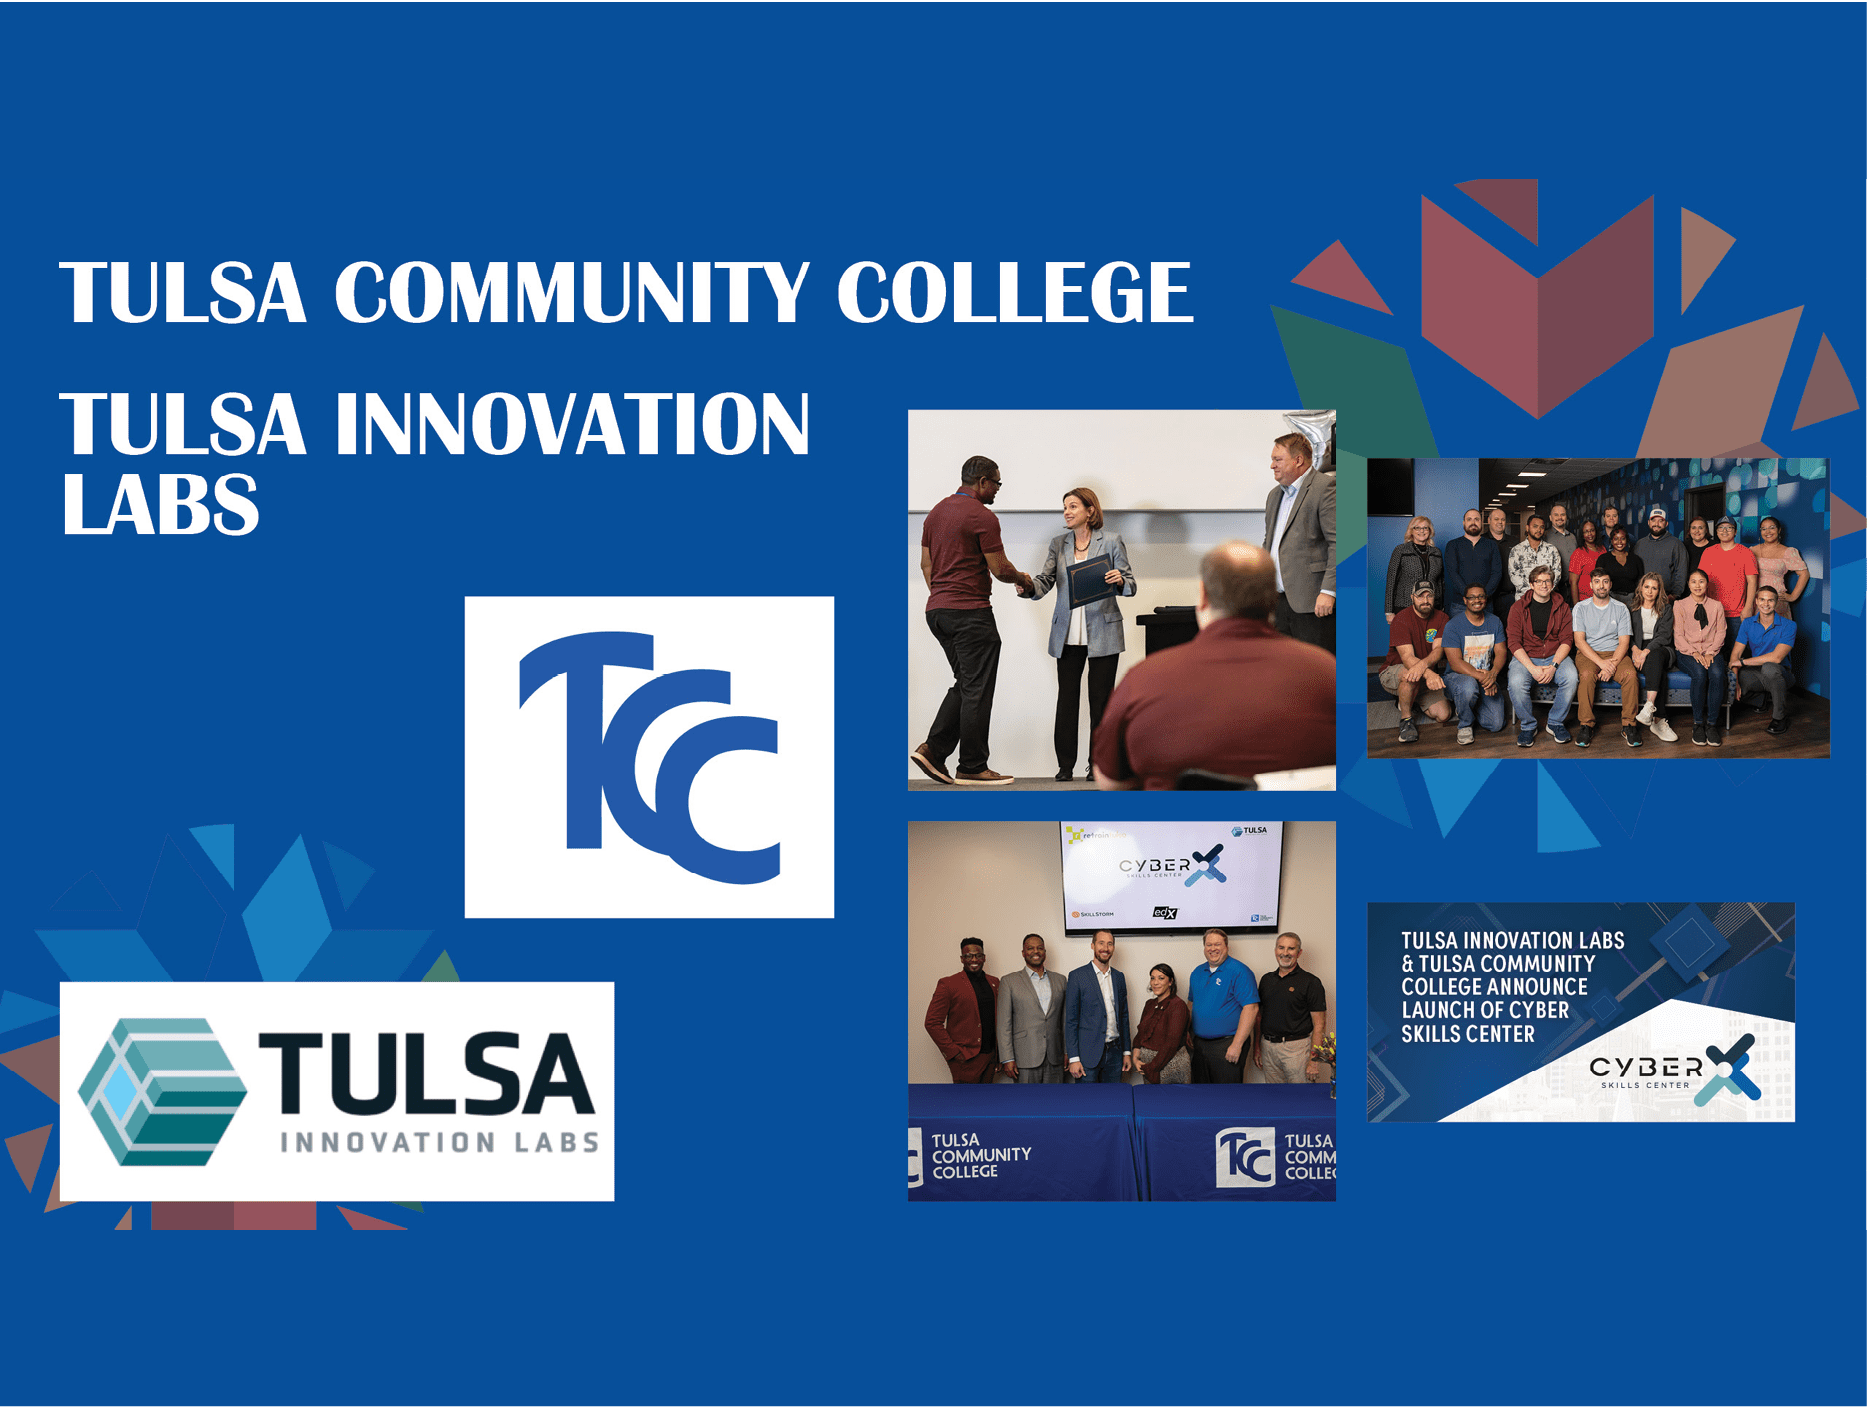 Tulsa Community College and Tulsa Innovation Labs